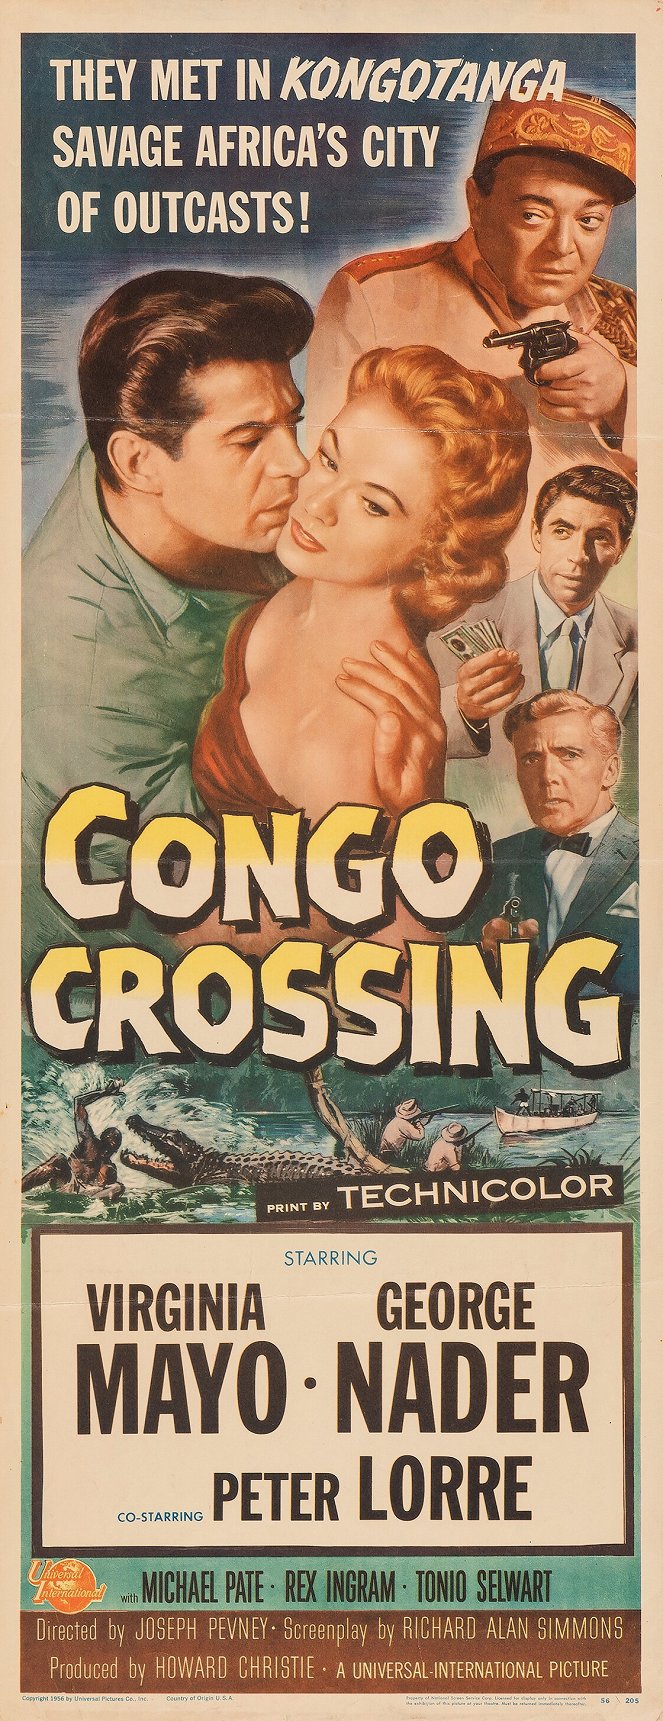 Congo Crossing - Posters